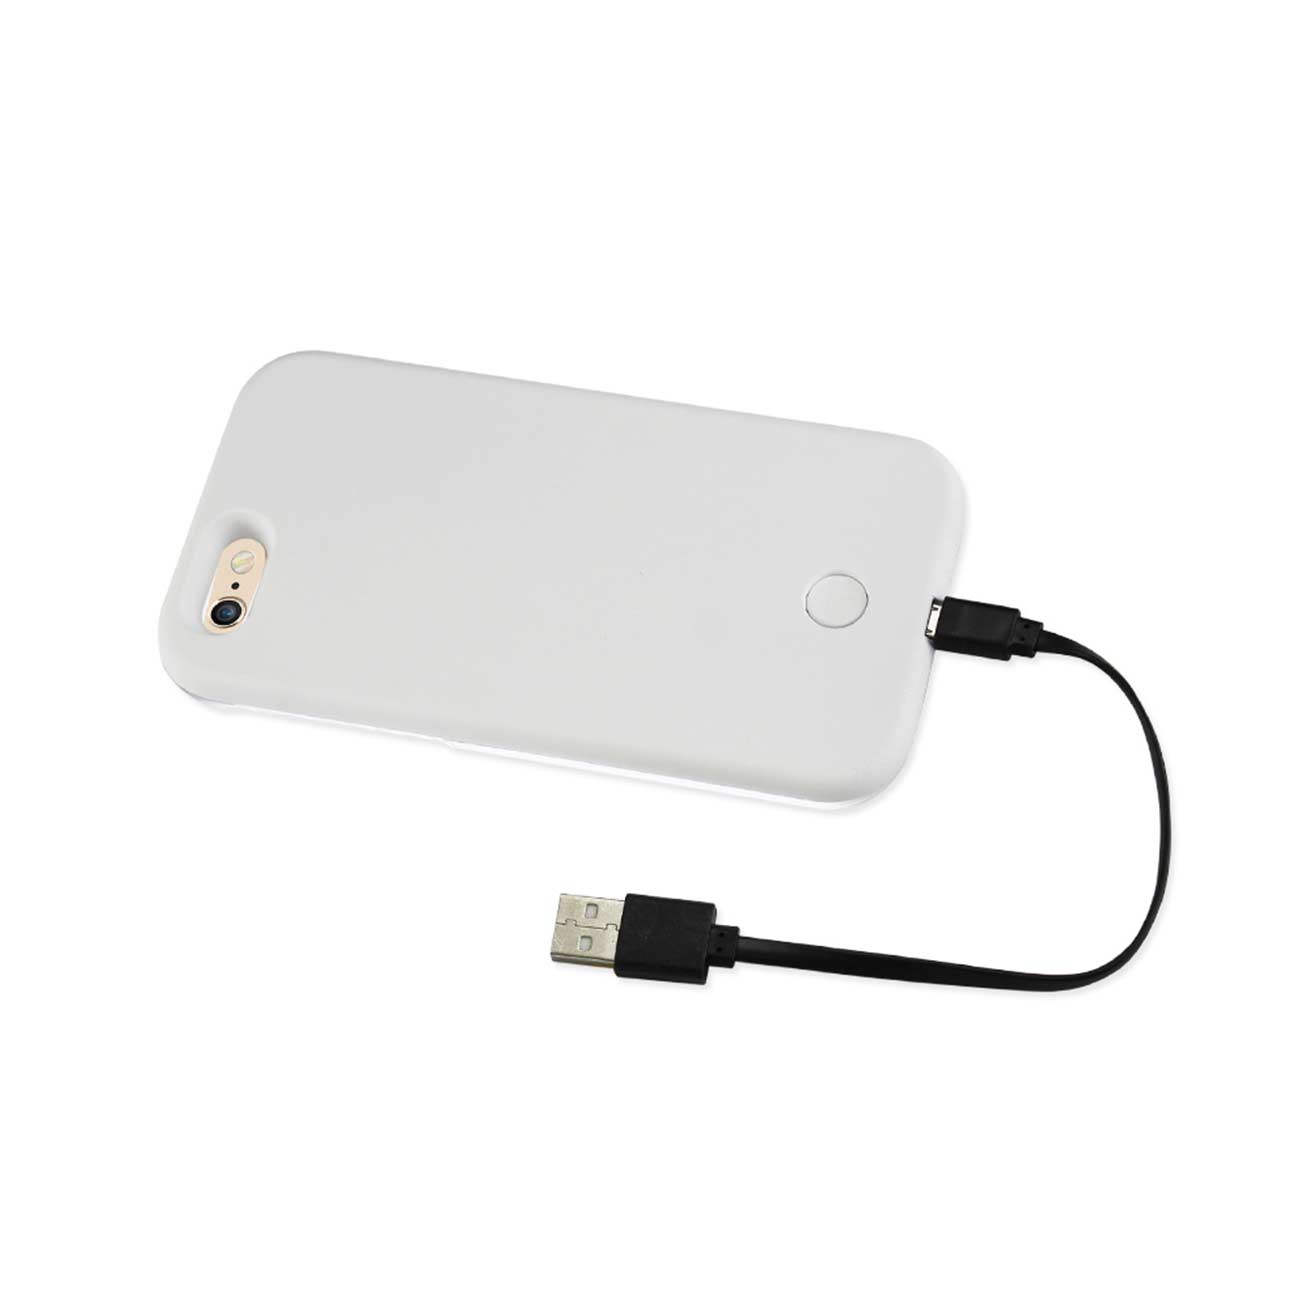 Case Illuminated LED Selfie Light Up iPhone 6/ 6S White Color